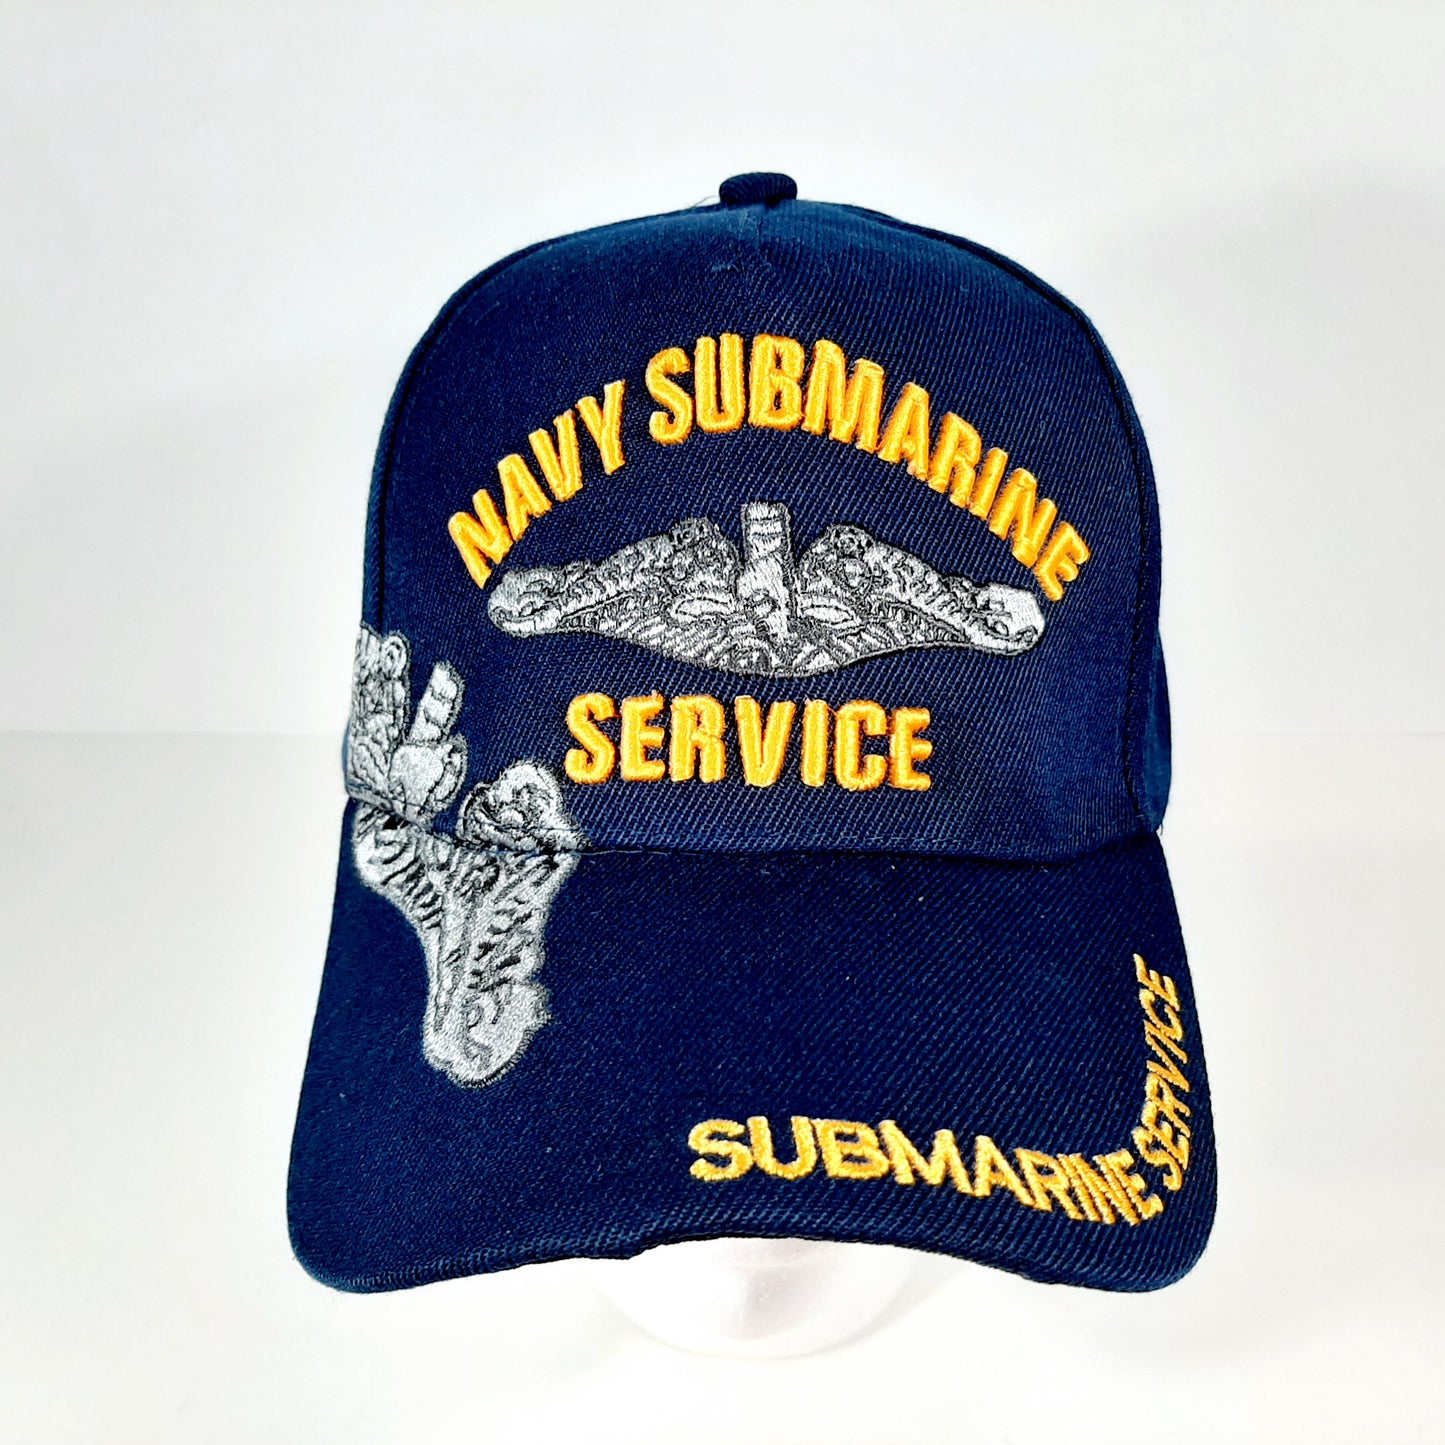 US Navy Submarine Service Mens Baseball Cap Hat Navy Blue Embroidered